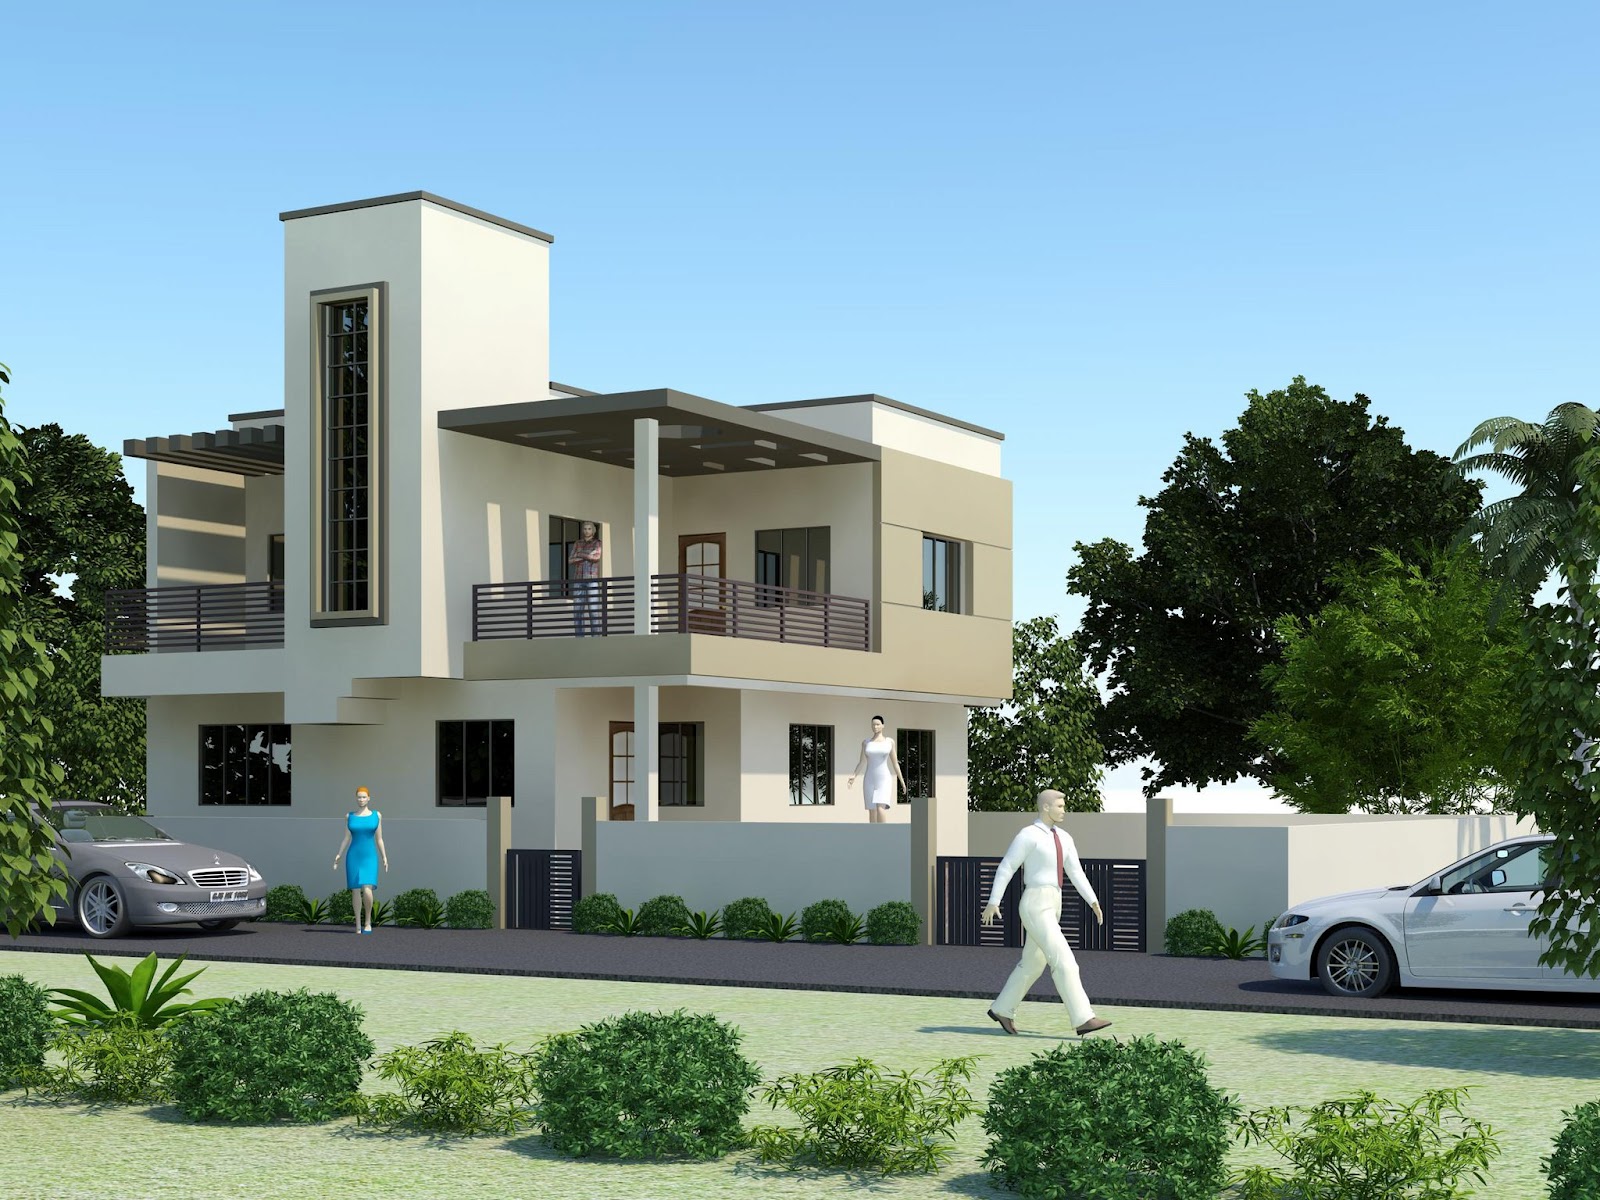 New home designs latest.: Modern homes exterior designs ...